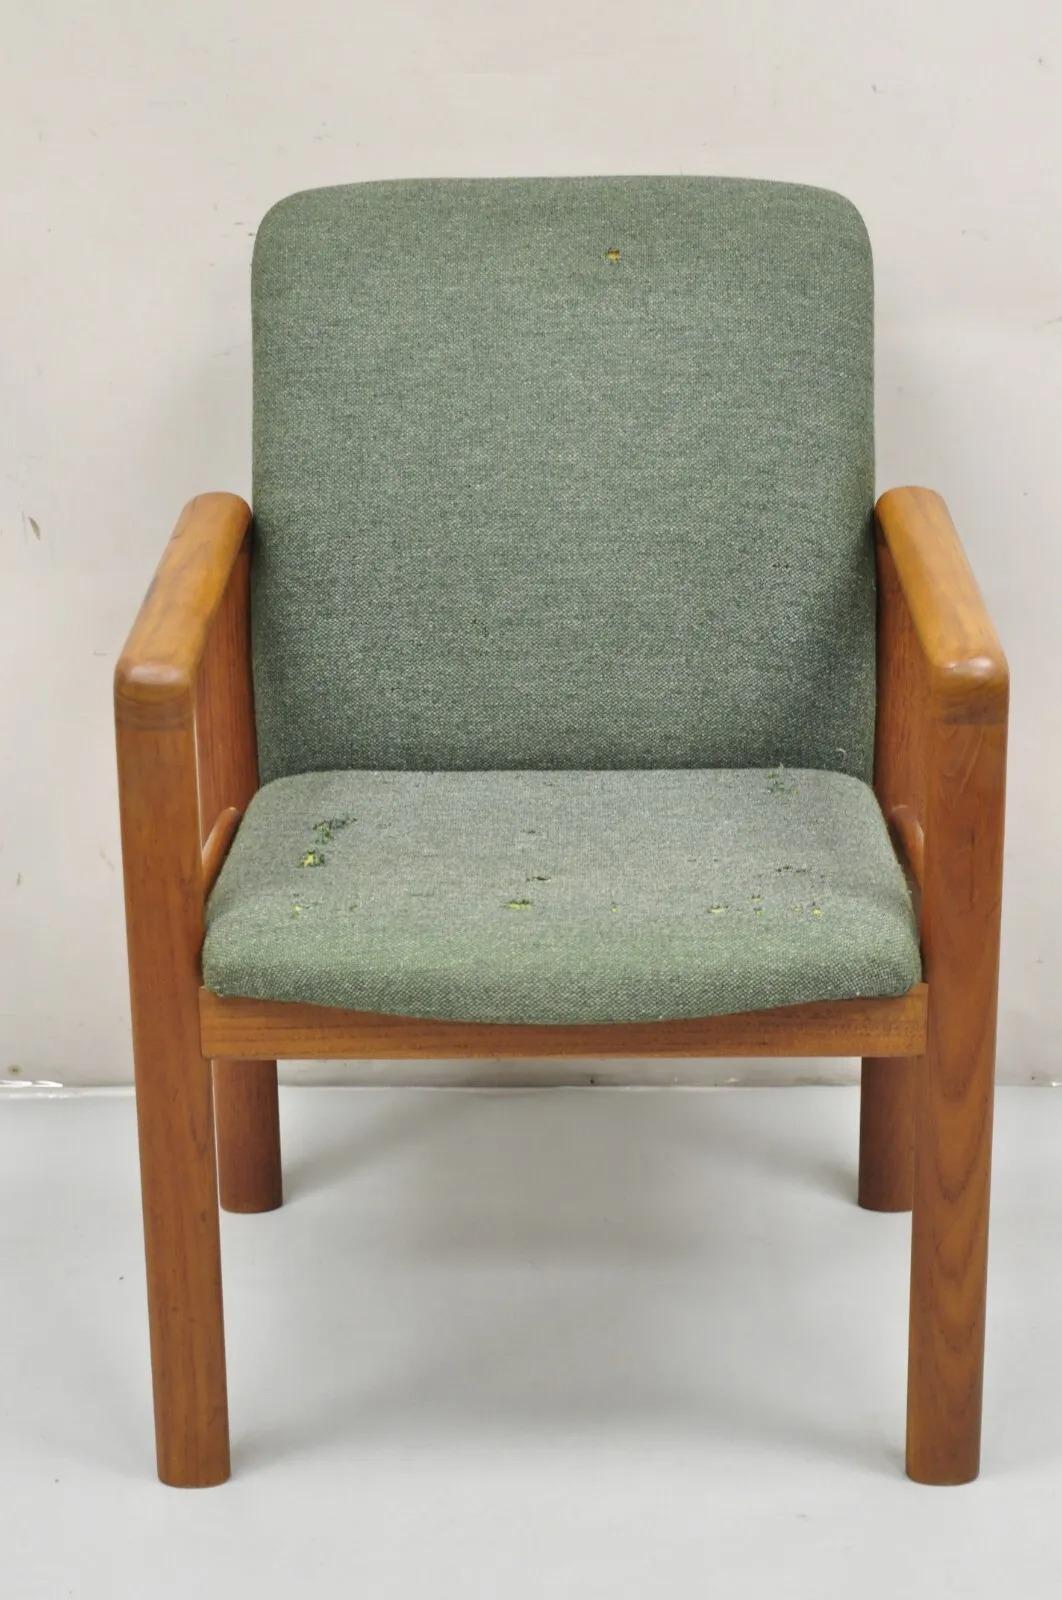 Schou Andersen Mobelfabrik Teak Wood Mid Century Danish Modern Arm Chair. Item featured has a solid wood frame, beautiful wood grain, original label, clean modernist lines, quality Danish craftsmanship, great style and form. Circa Mid 20th Century.